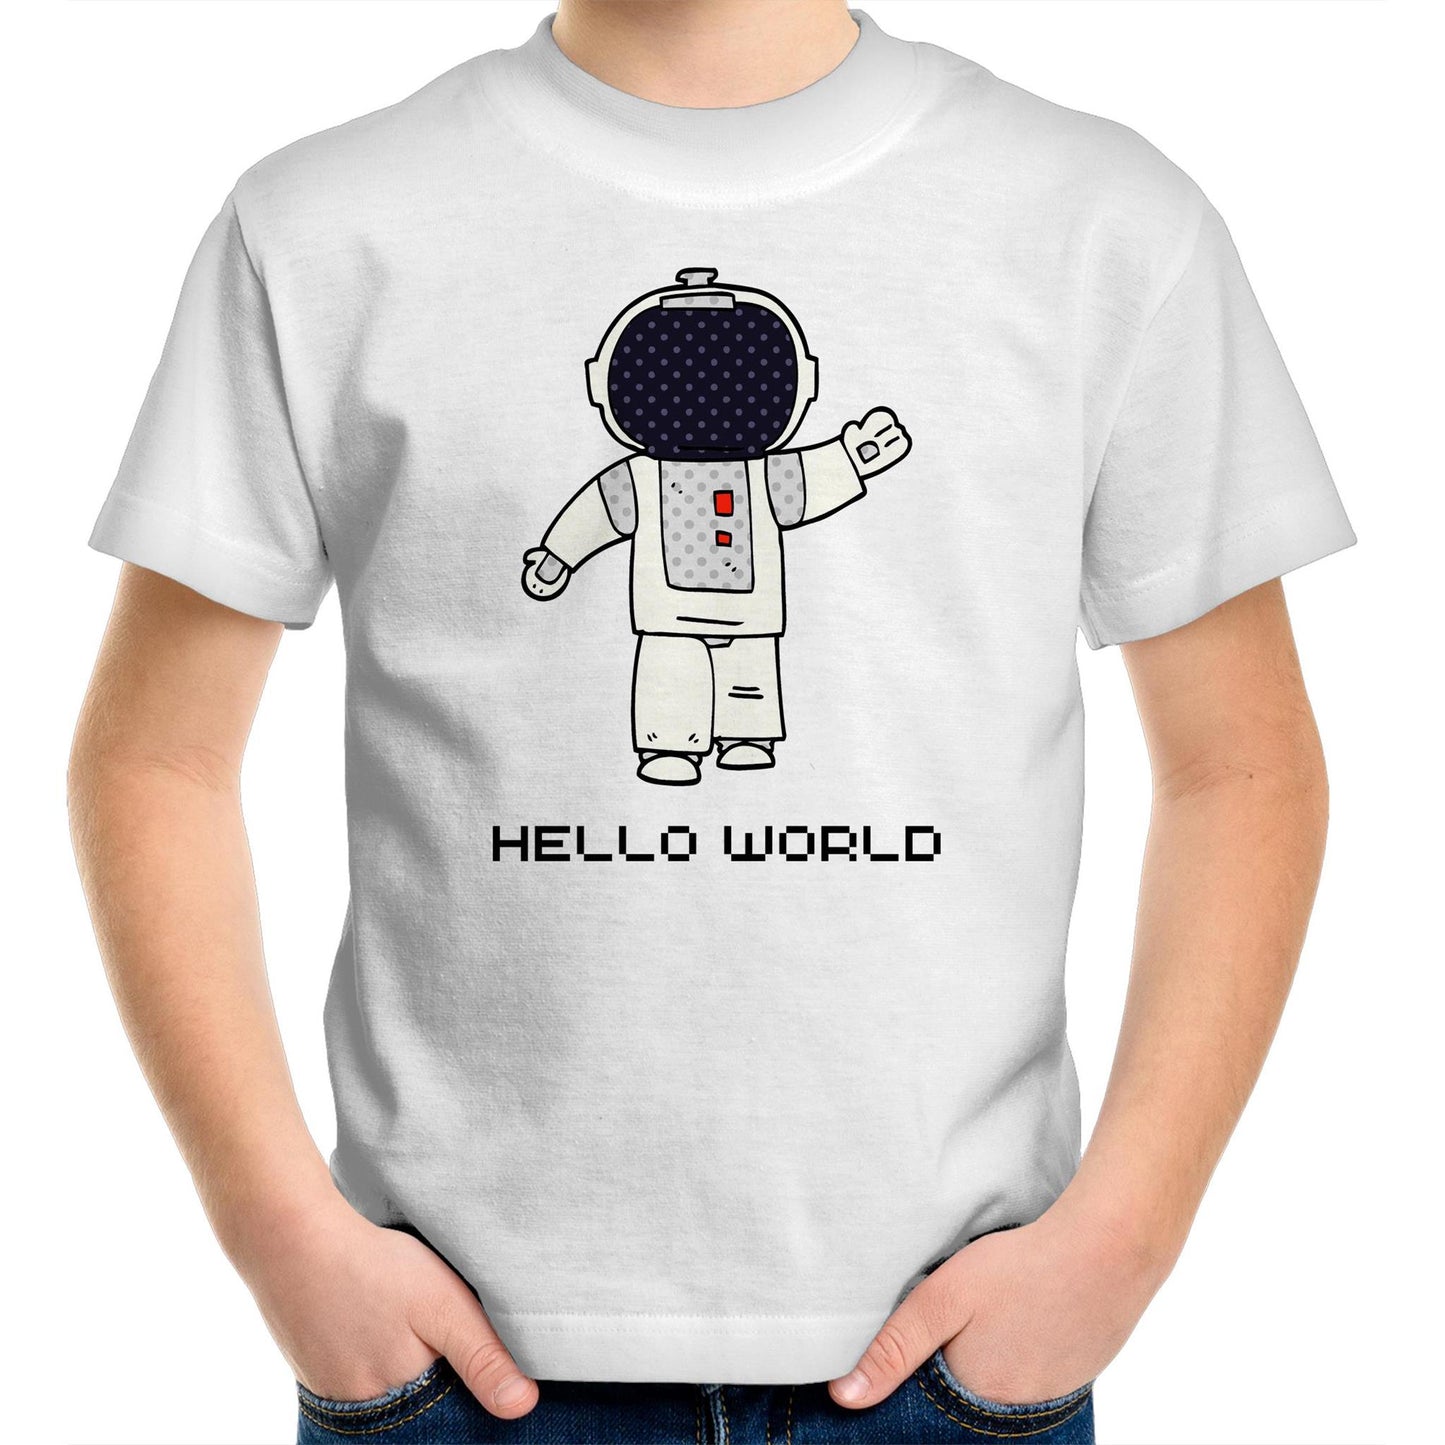 Astronaut, Hello World - Kids Youth T-Shirt White Kids Youth T-shirt Space